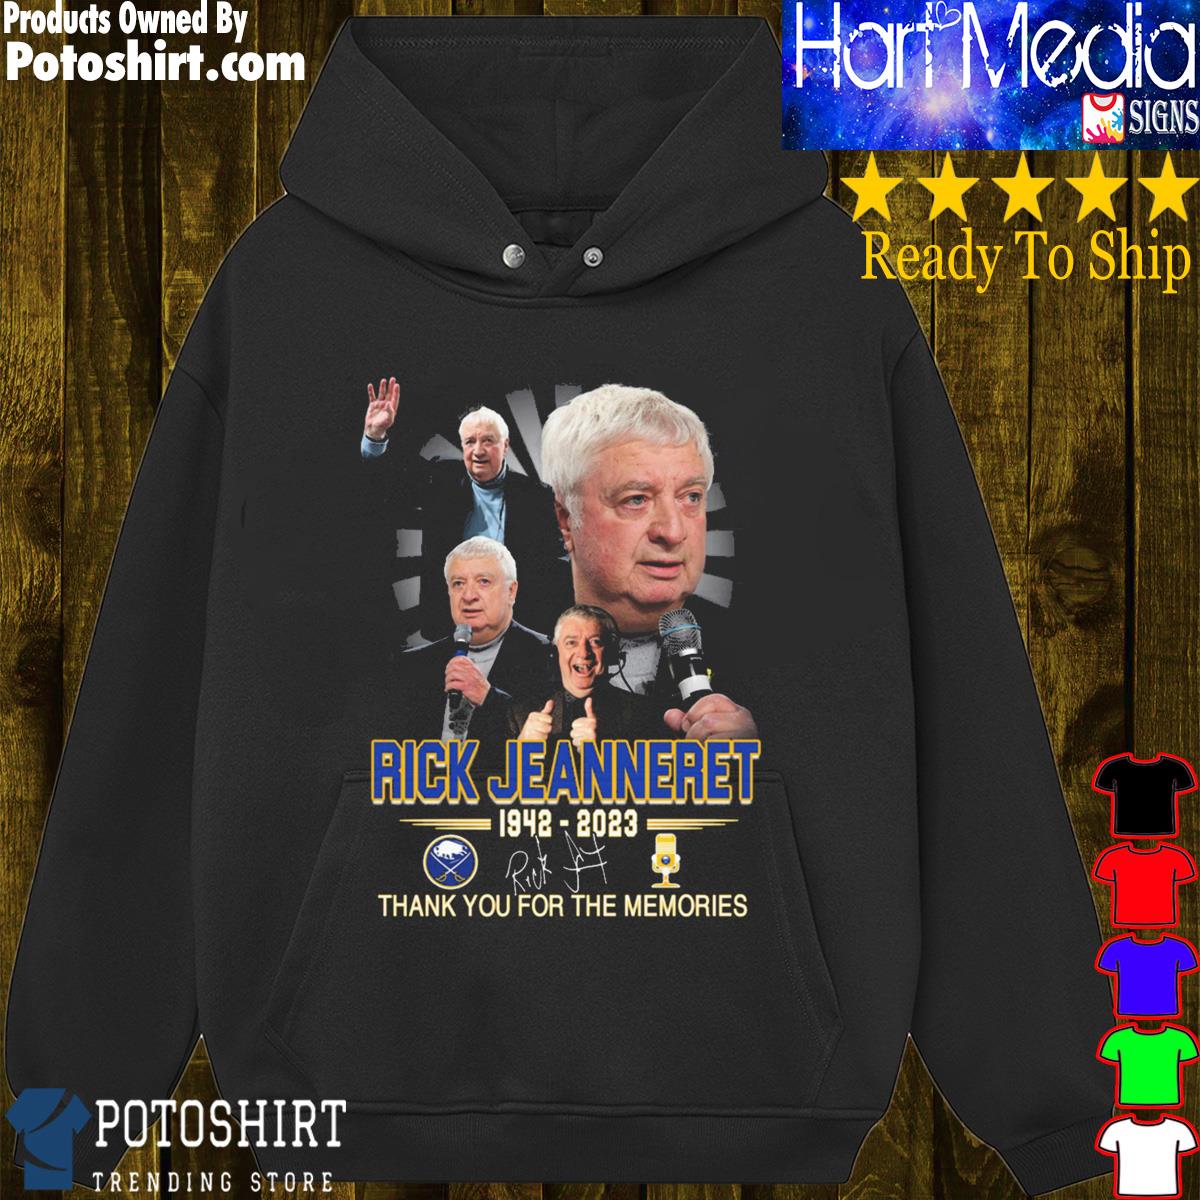 In Memory Of Rick Jeanneret 1942 2023 Memories Shirt Hoodie Sweater -  Growkoc